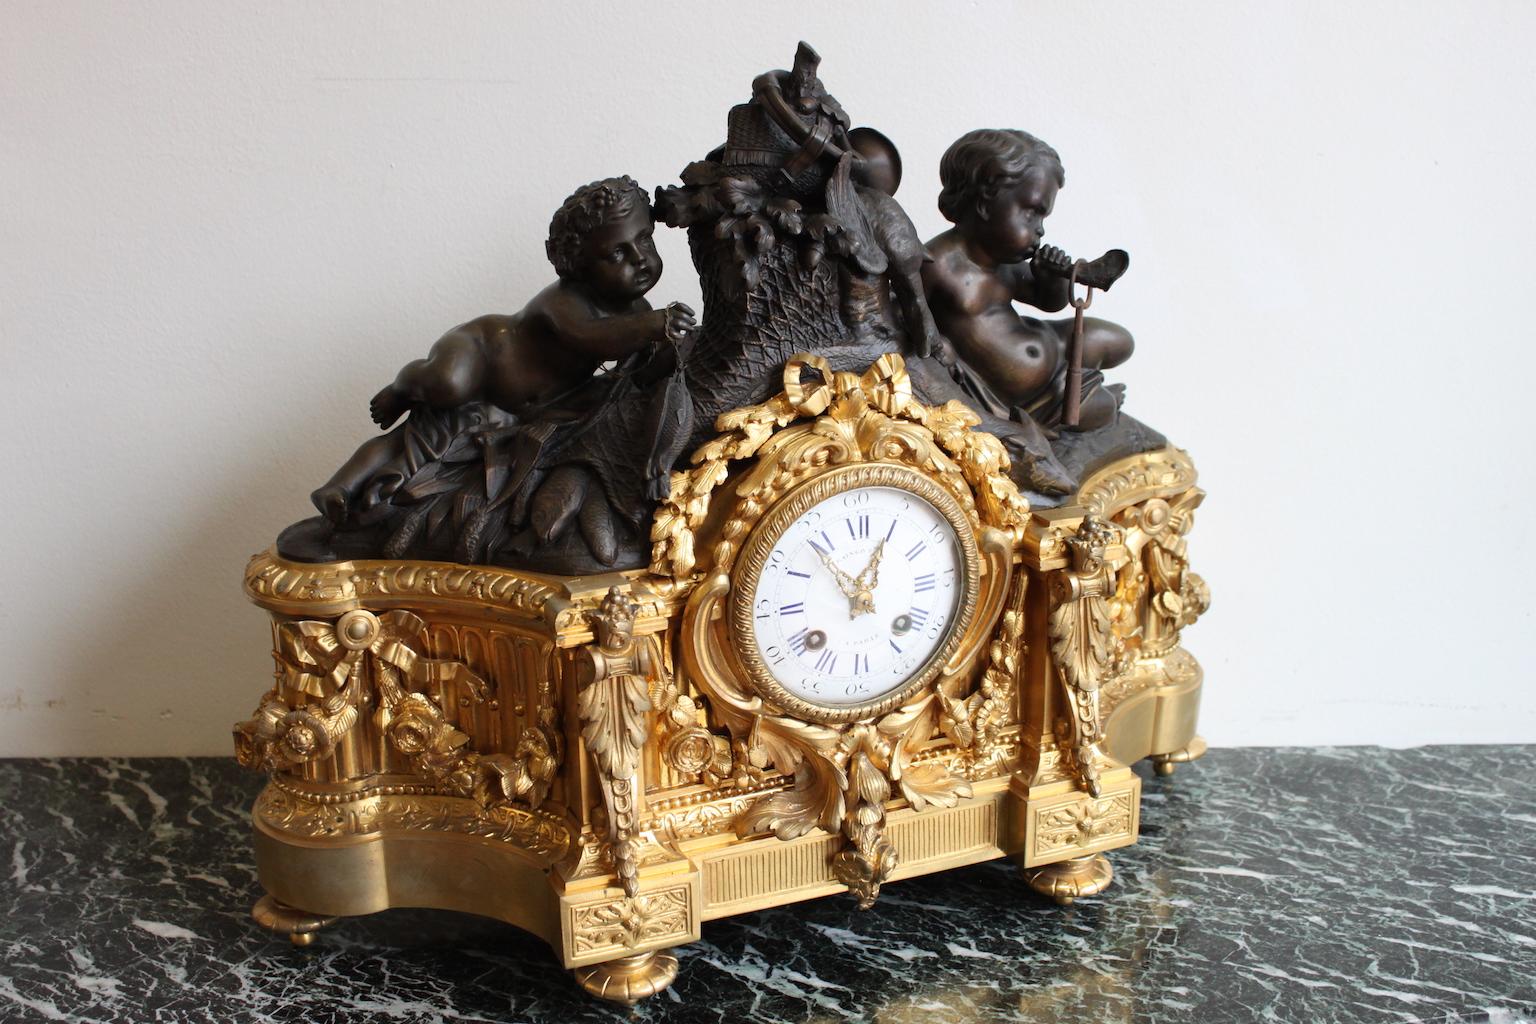 19th century Raingo in Paris clock in gilt bronze, decorated with children. Good condition, rear glass broken.
In working order.
Dimensions: Width 45 cm, height 37 cm, depth 15 cm.